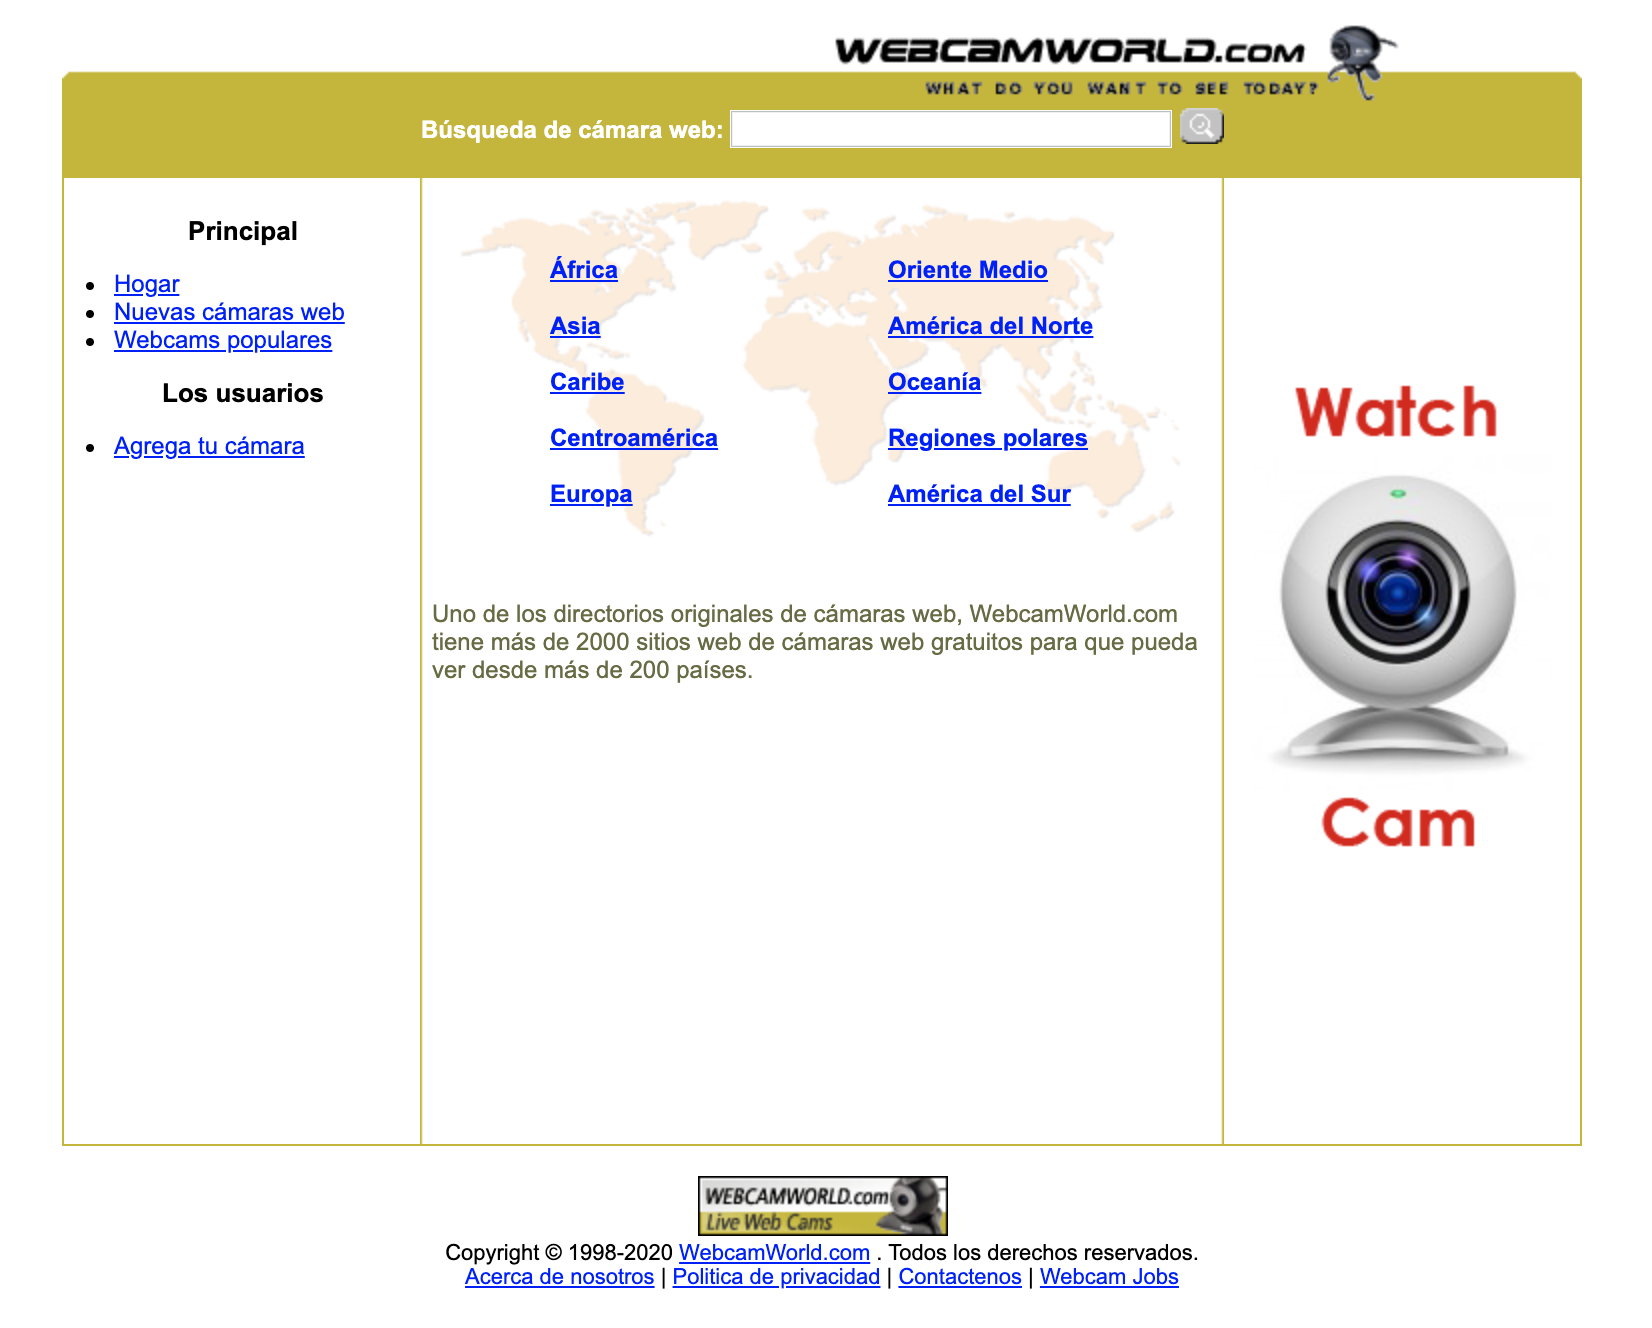 Webcam World